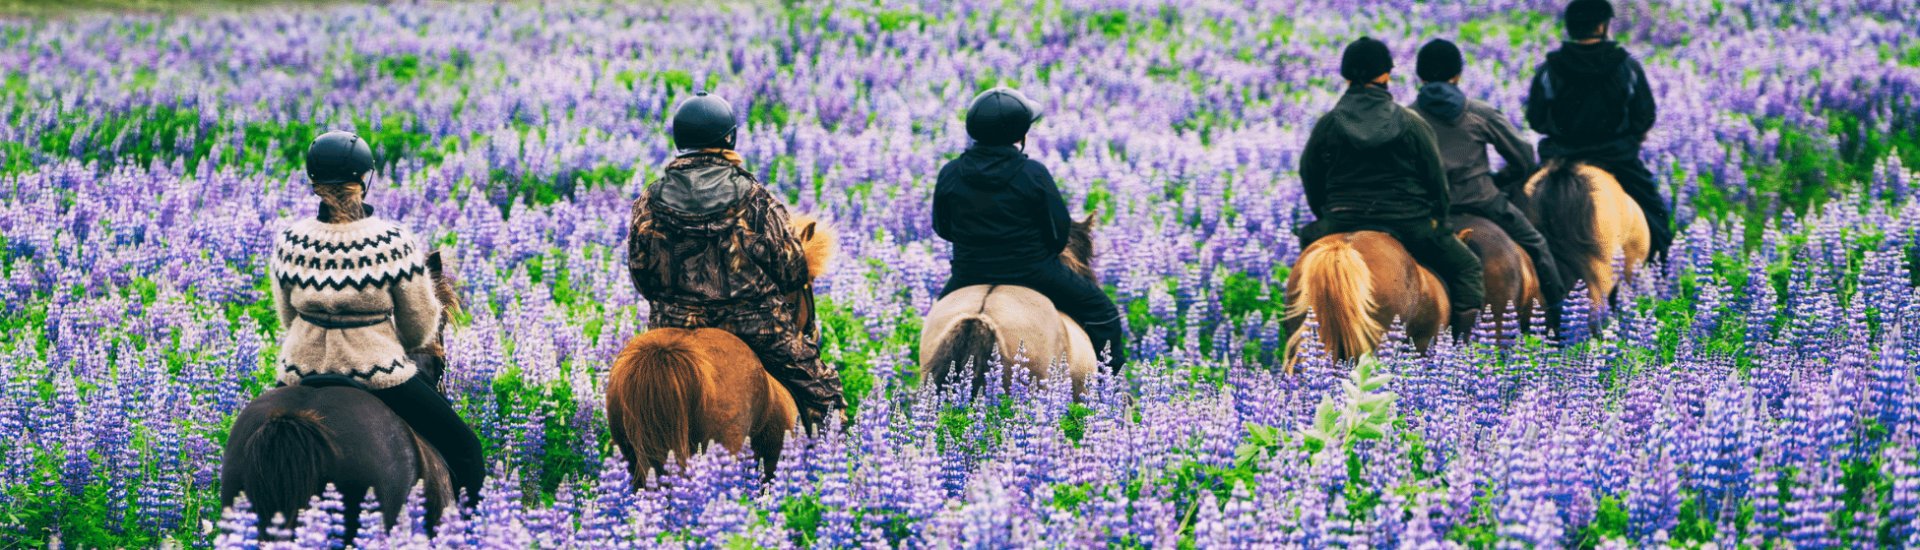 Horseriding-Iceland